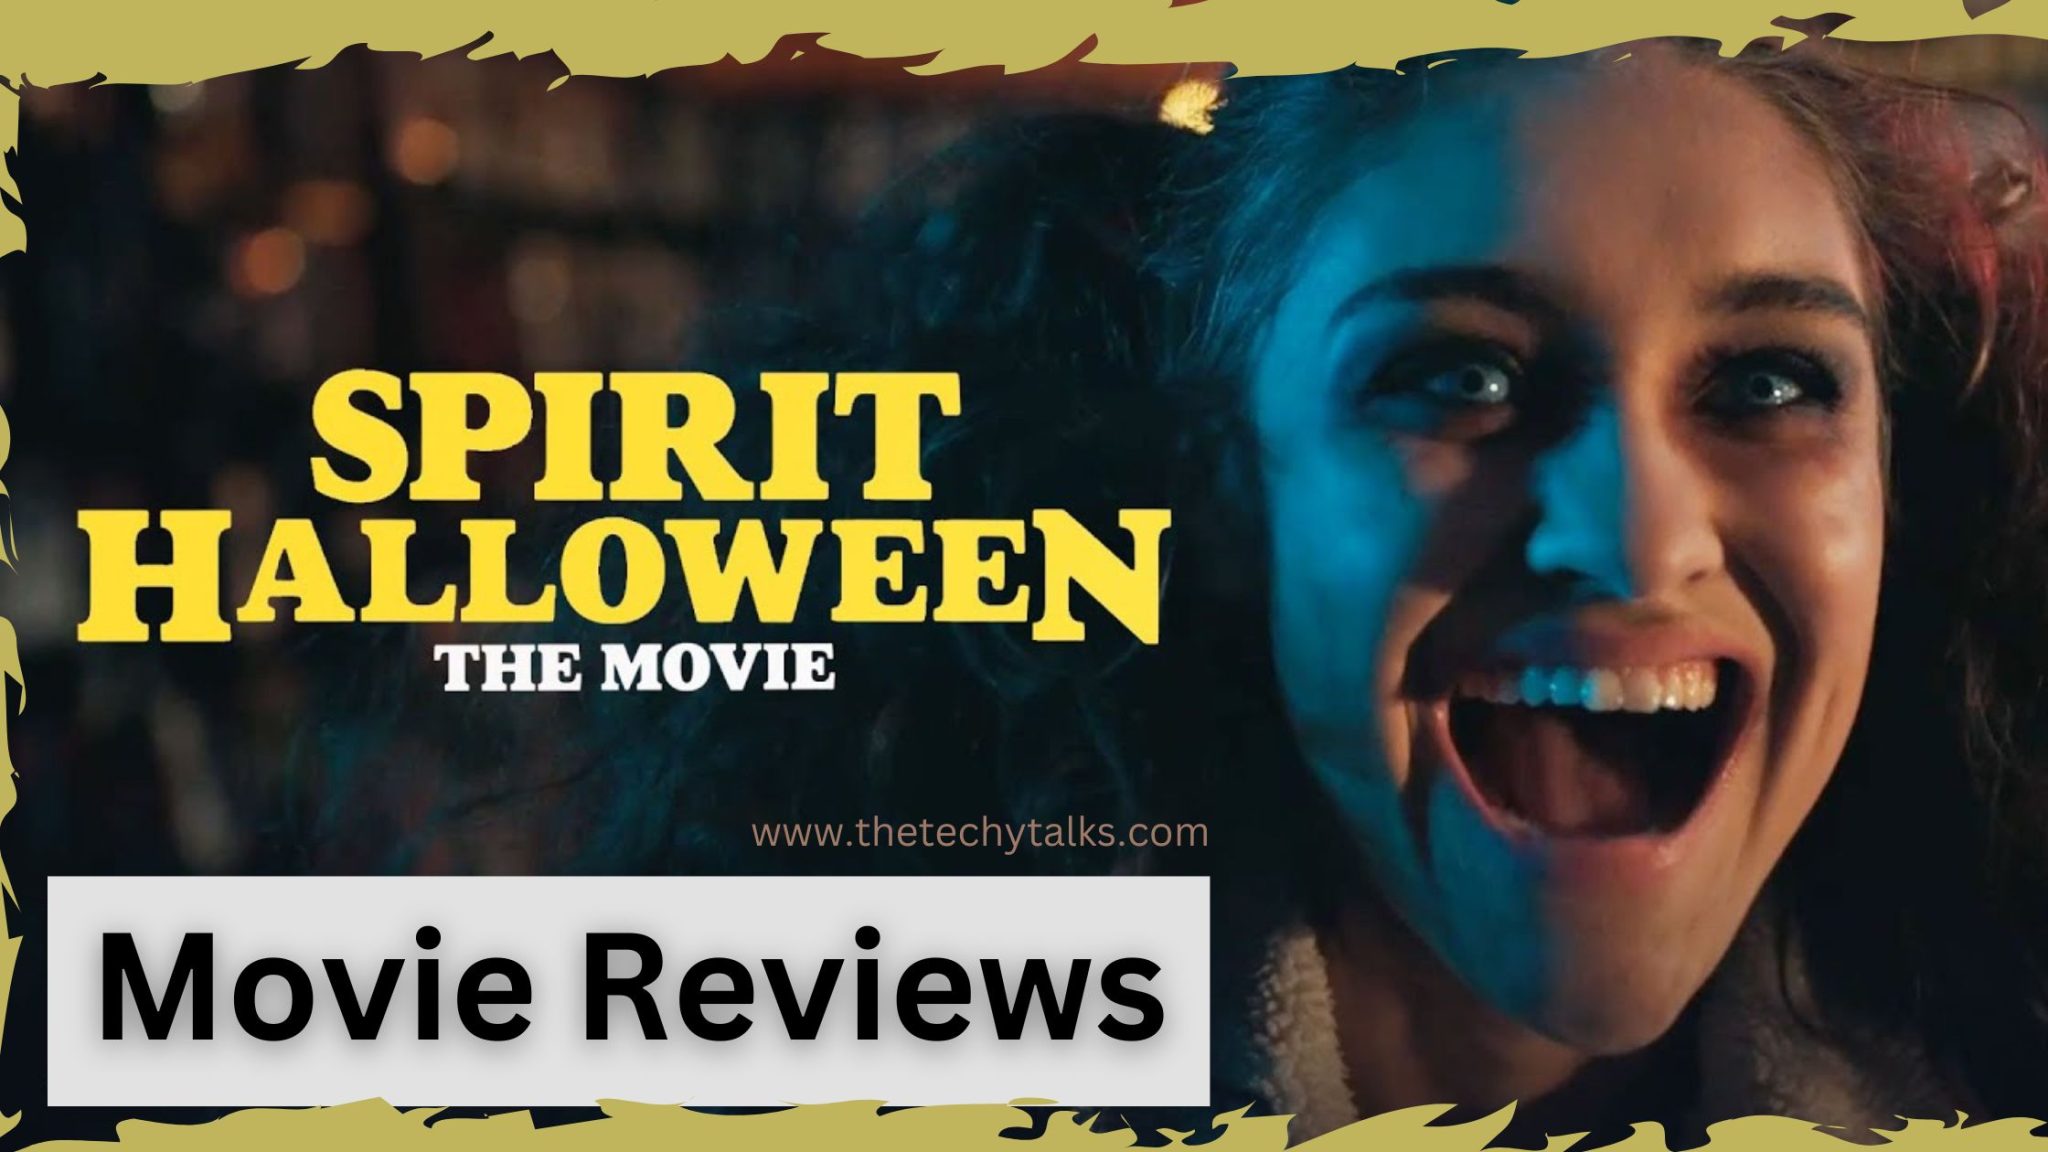 Spirit Halloween: The Movie Reviews